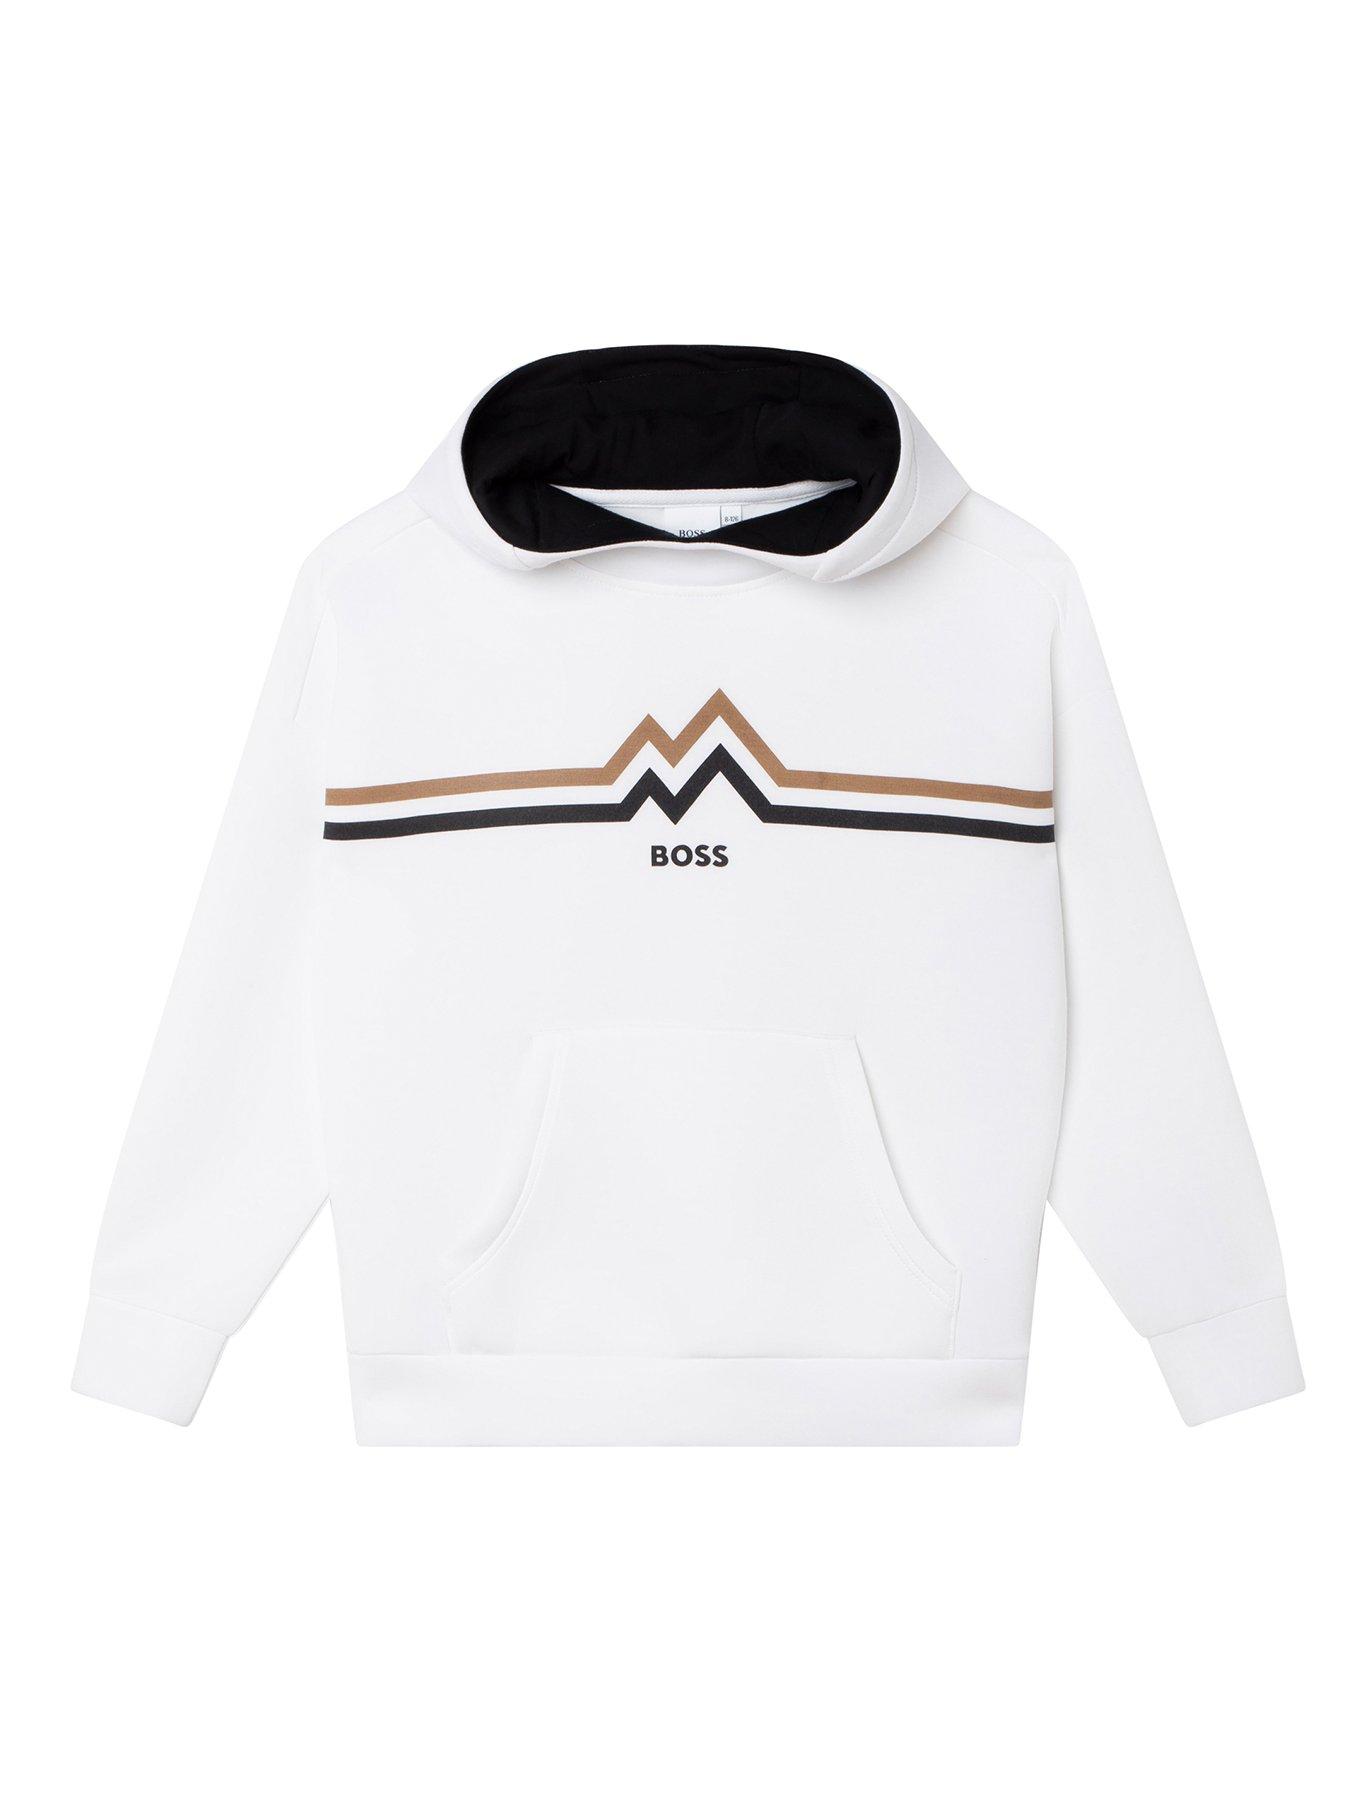 KIDS FASHION Jumpers & Sweatshirts Ribbed discount 95% White 3-6M Charanga sweatshirt 